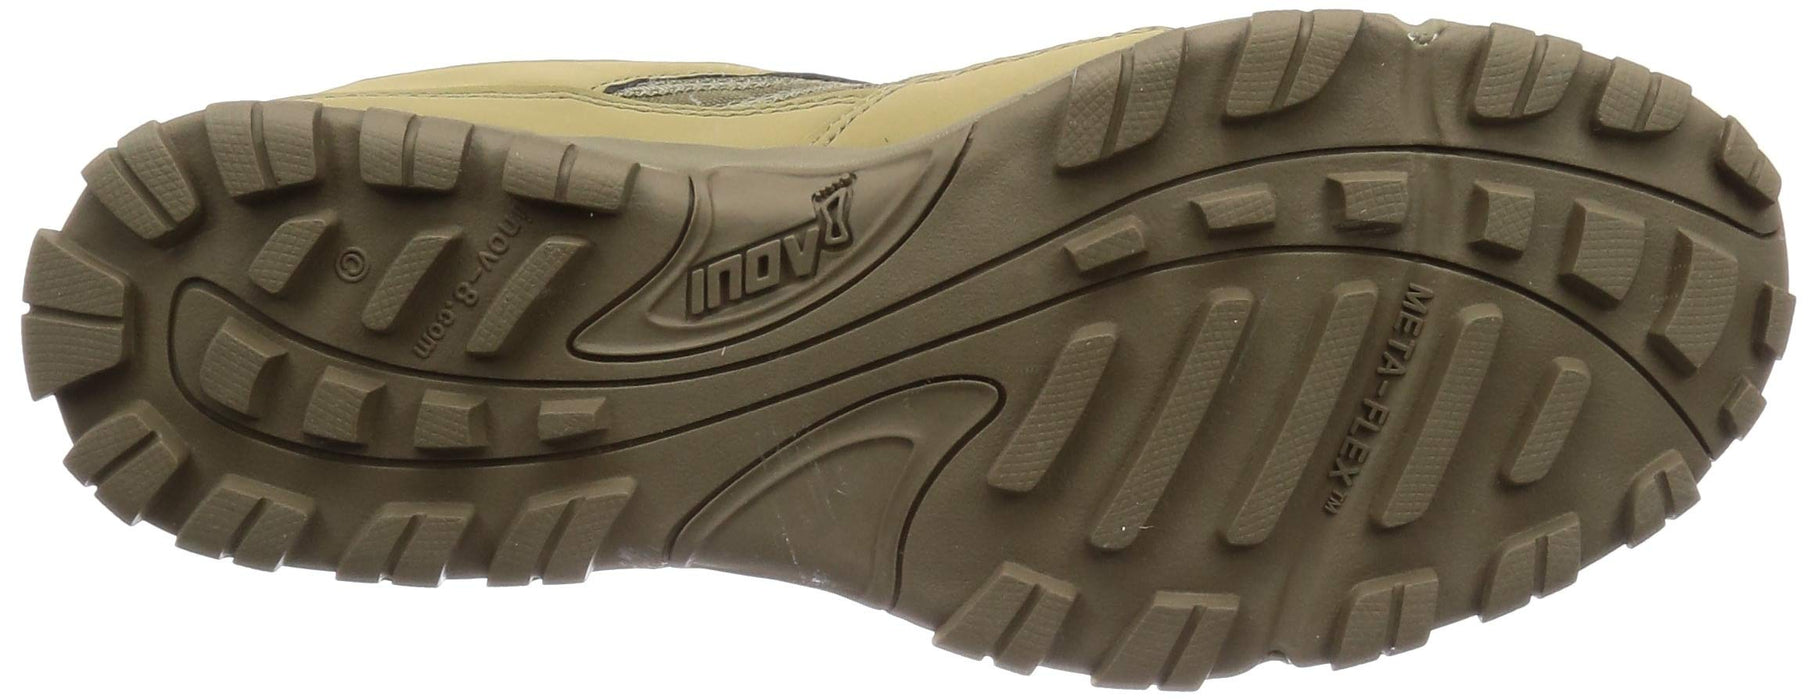 Inov-8 Flyroc 345 GTX Dark Olive Men's Size 5 Running Shoes